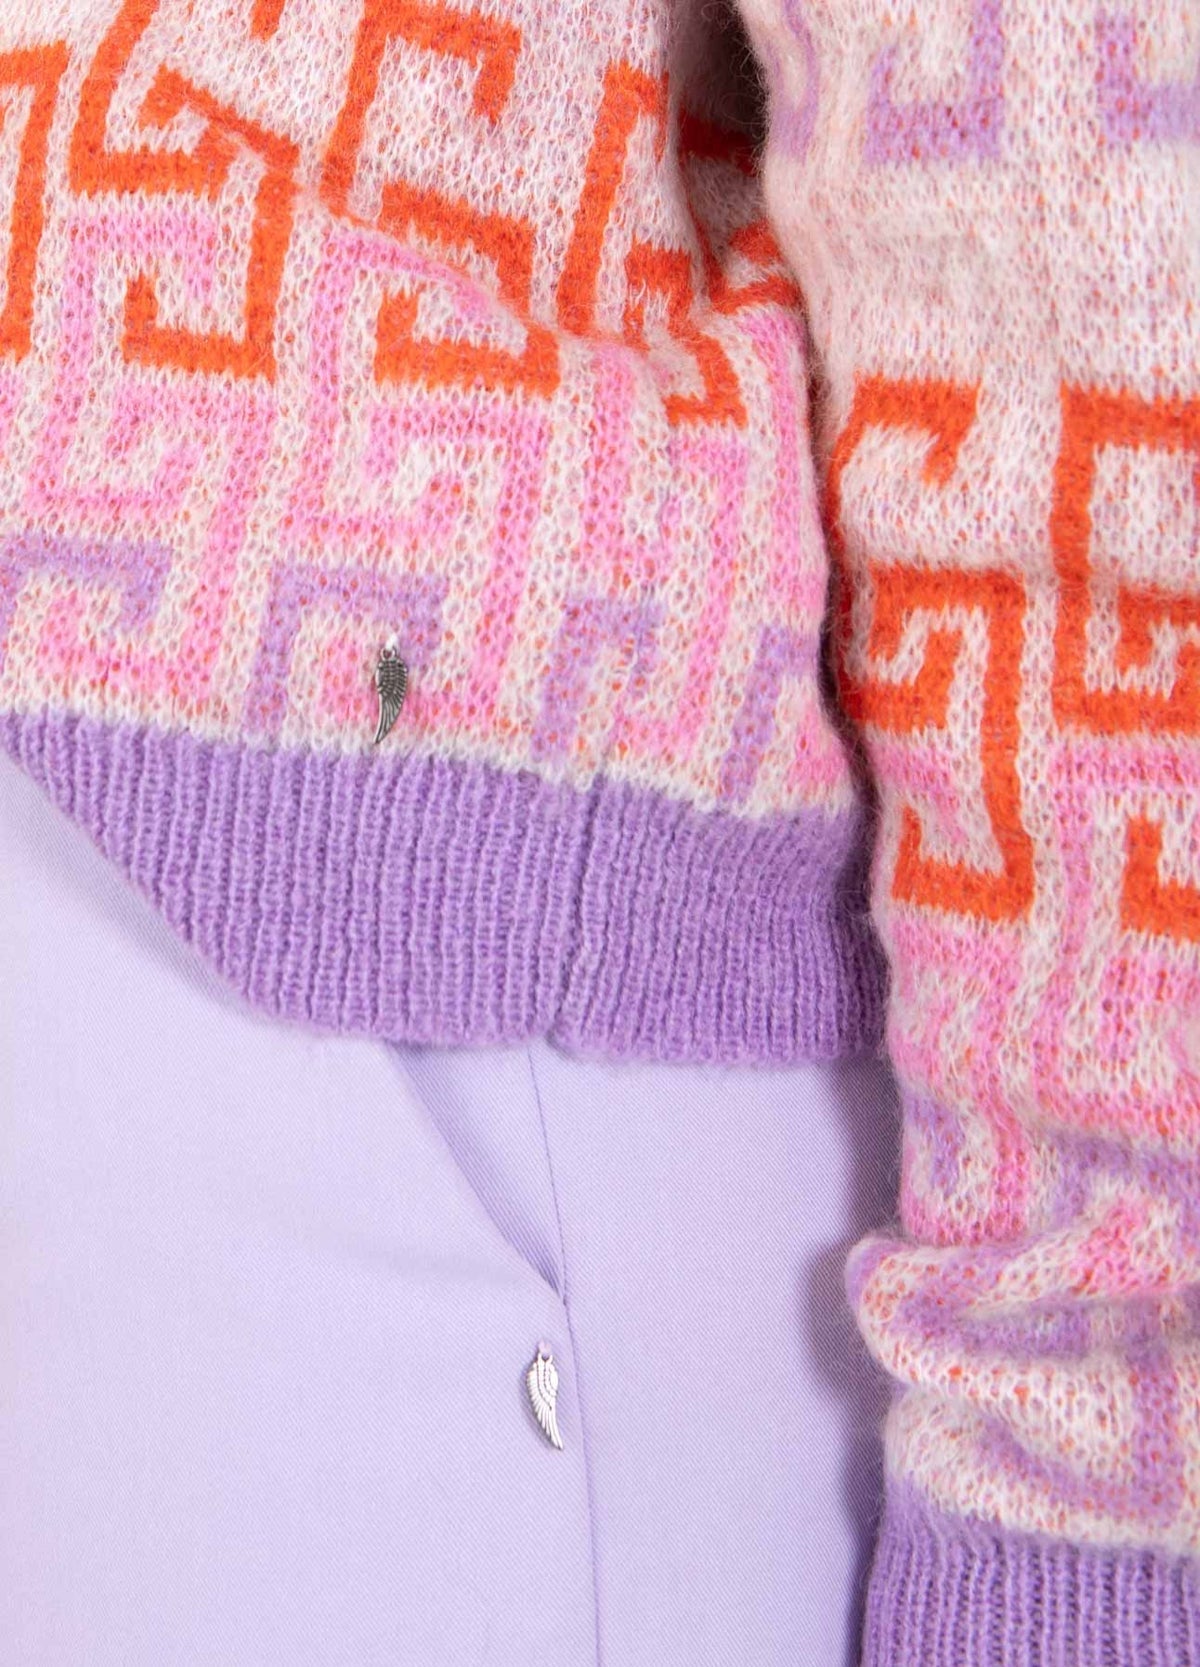 Purple and Lilac Knit Jaquard Sweater